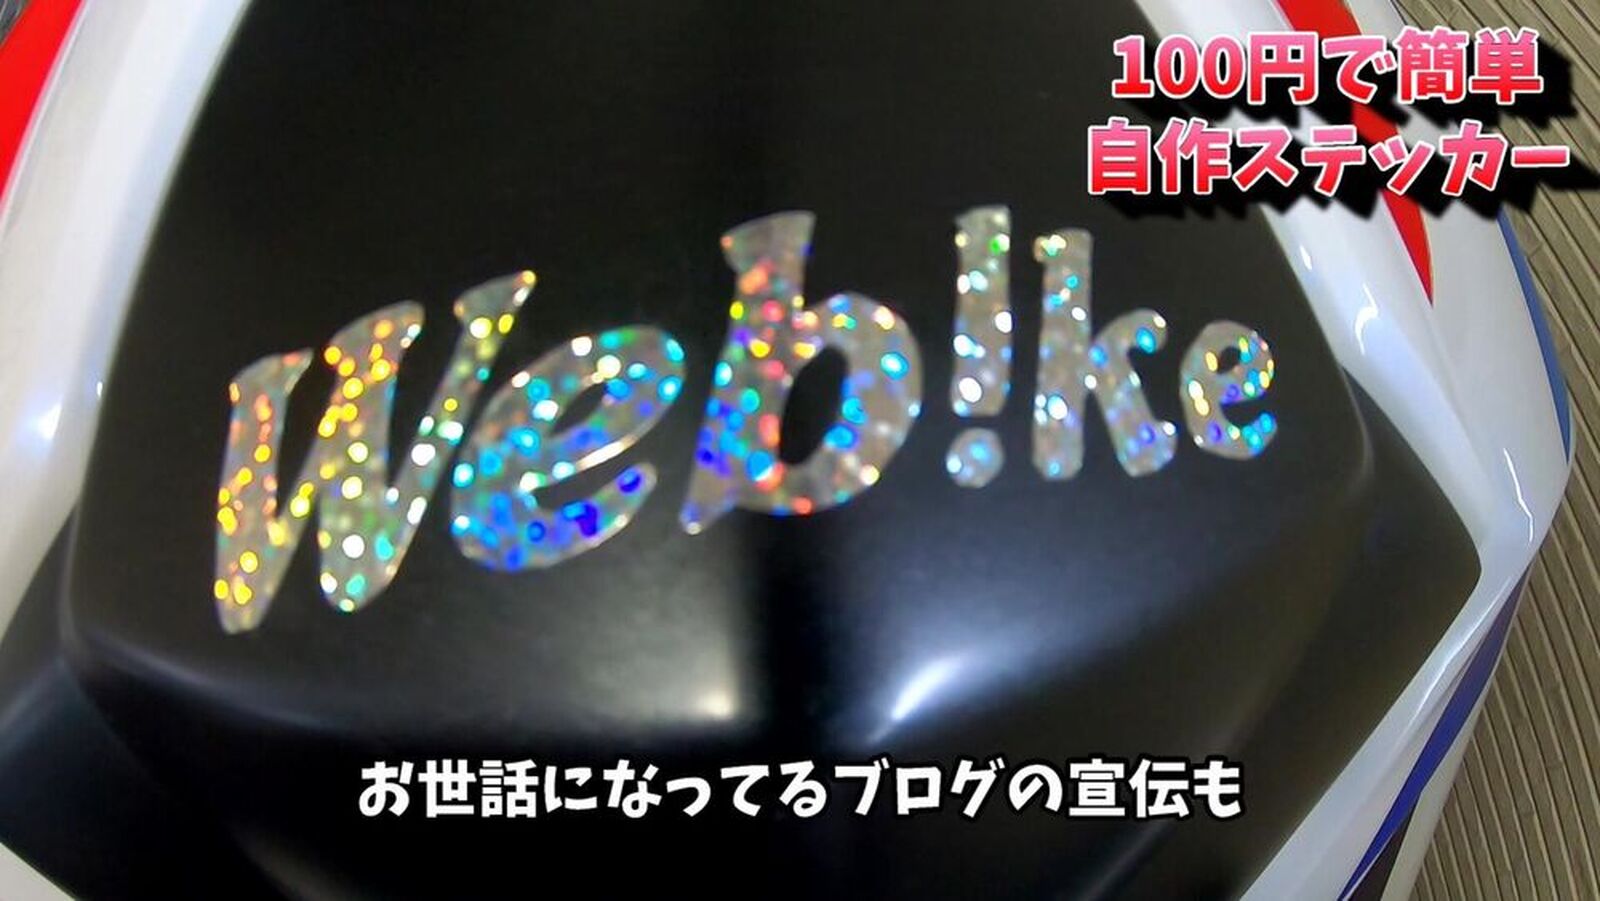 Suzuki Gsx R1000 100円 で 自作 ステッカー チューン 100均 ダイソー編 ウェビックコミュニティ